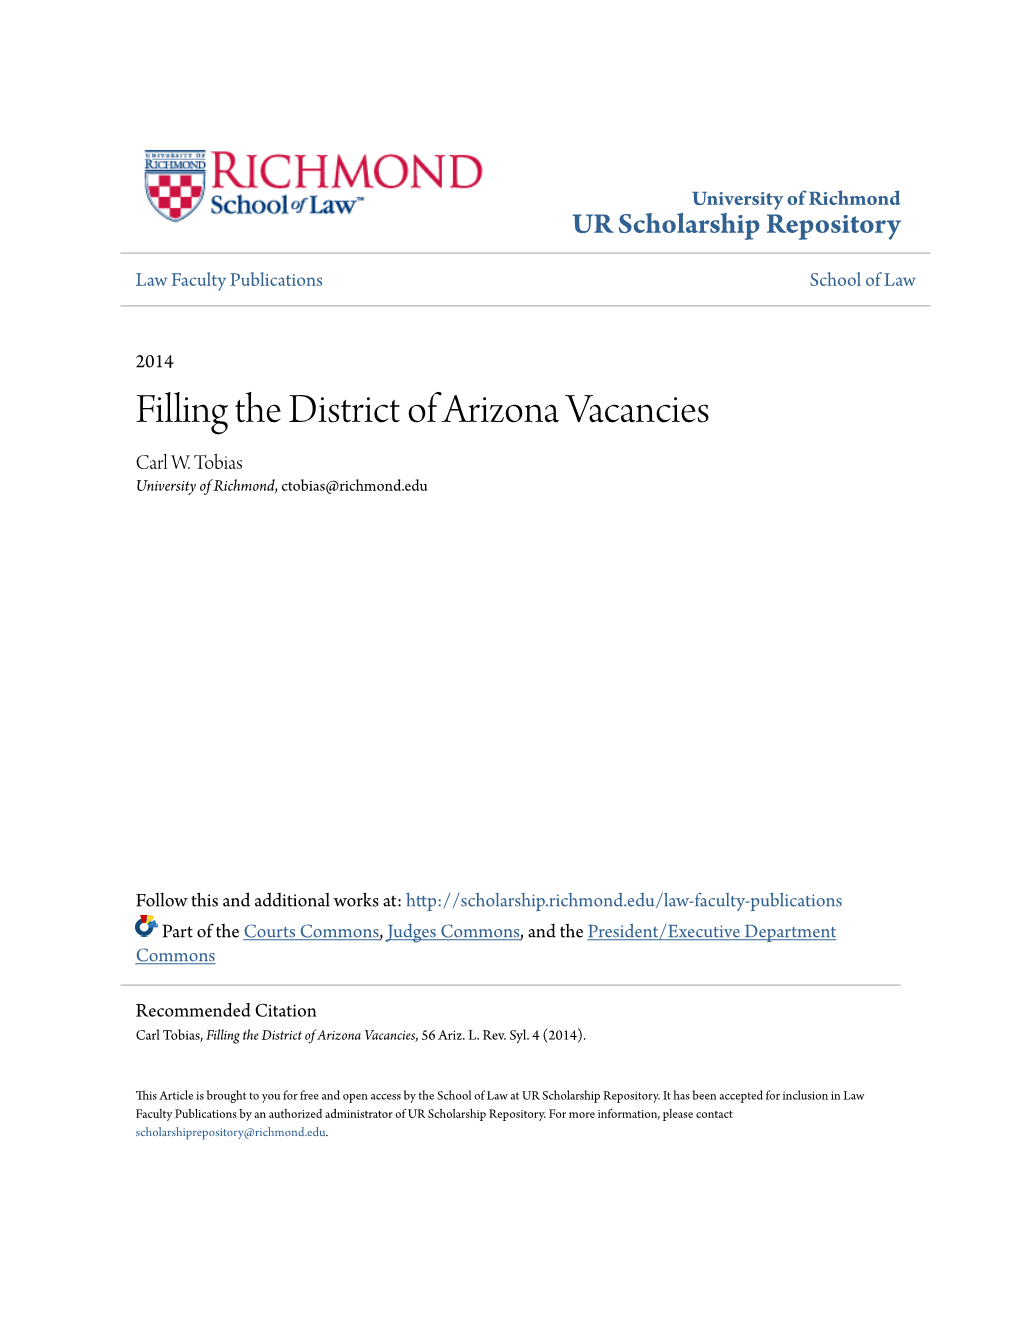 Filling the District of Arizona Vacancies Carl W